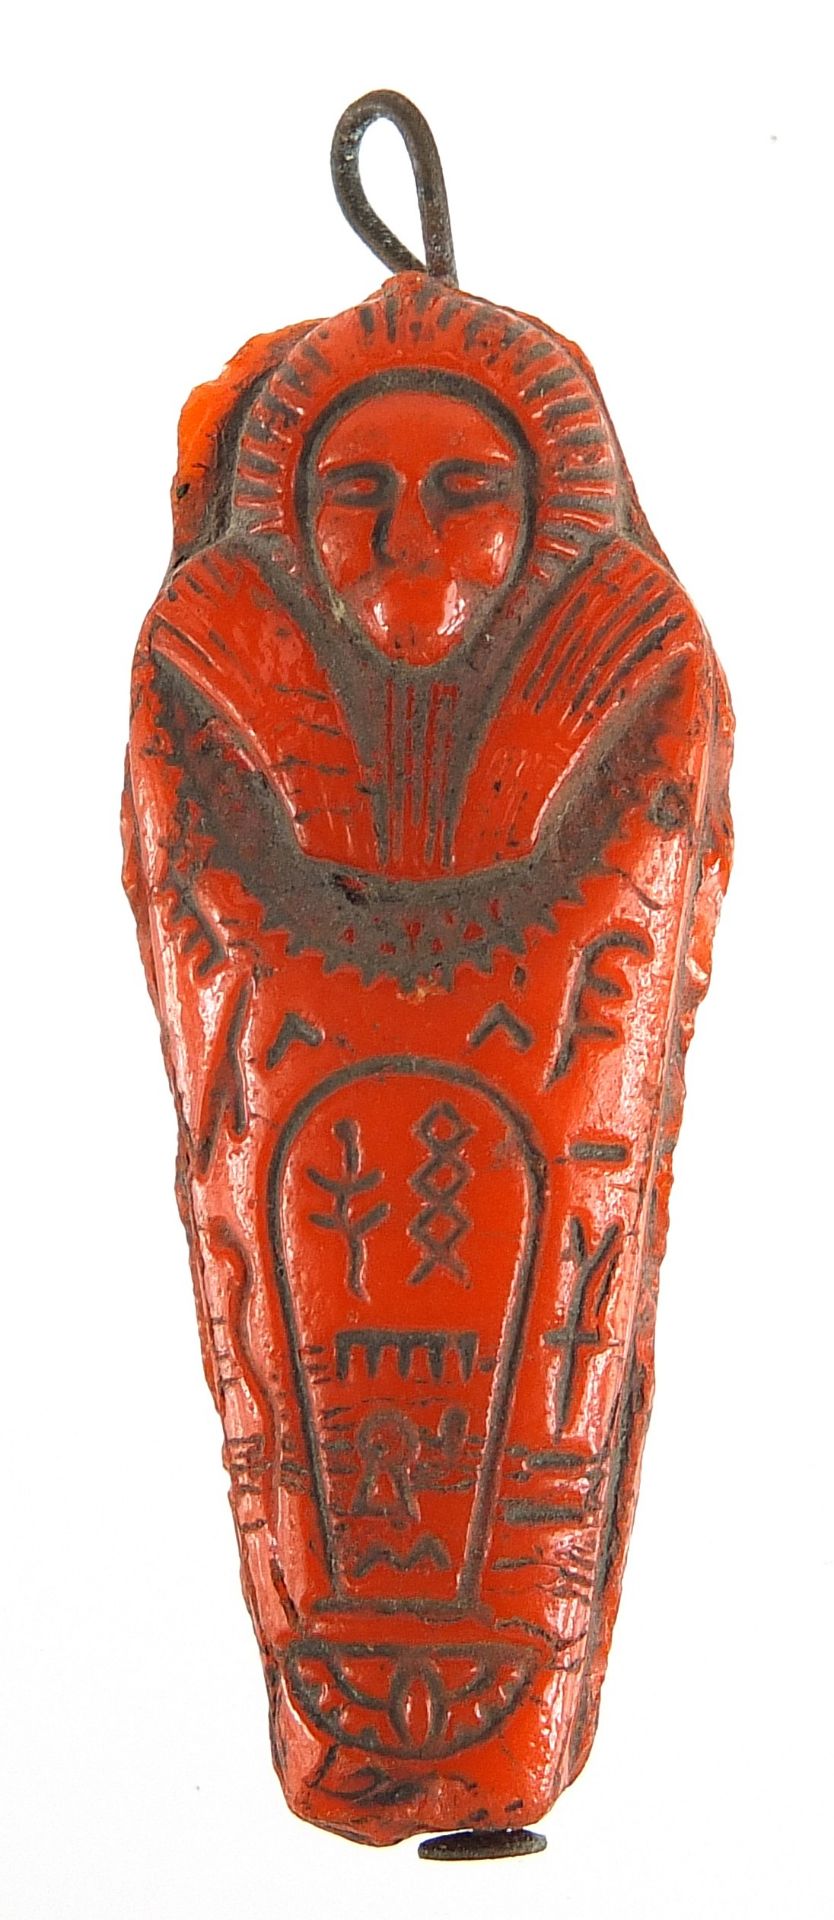 Egyptian ushabti pendant decorated with hieroglyphics, 3.5cm high - Image 2 of 6